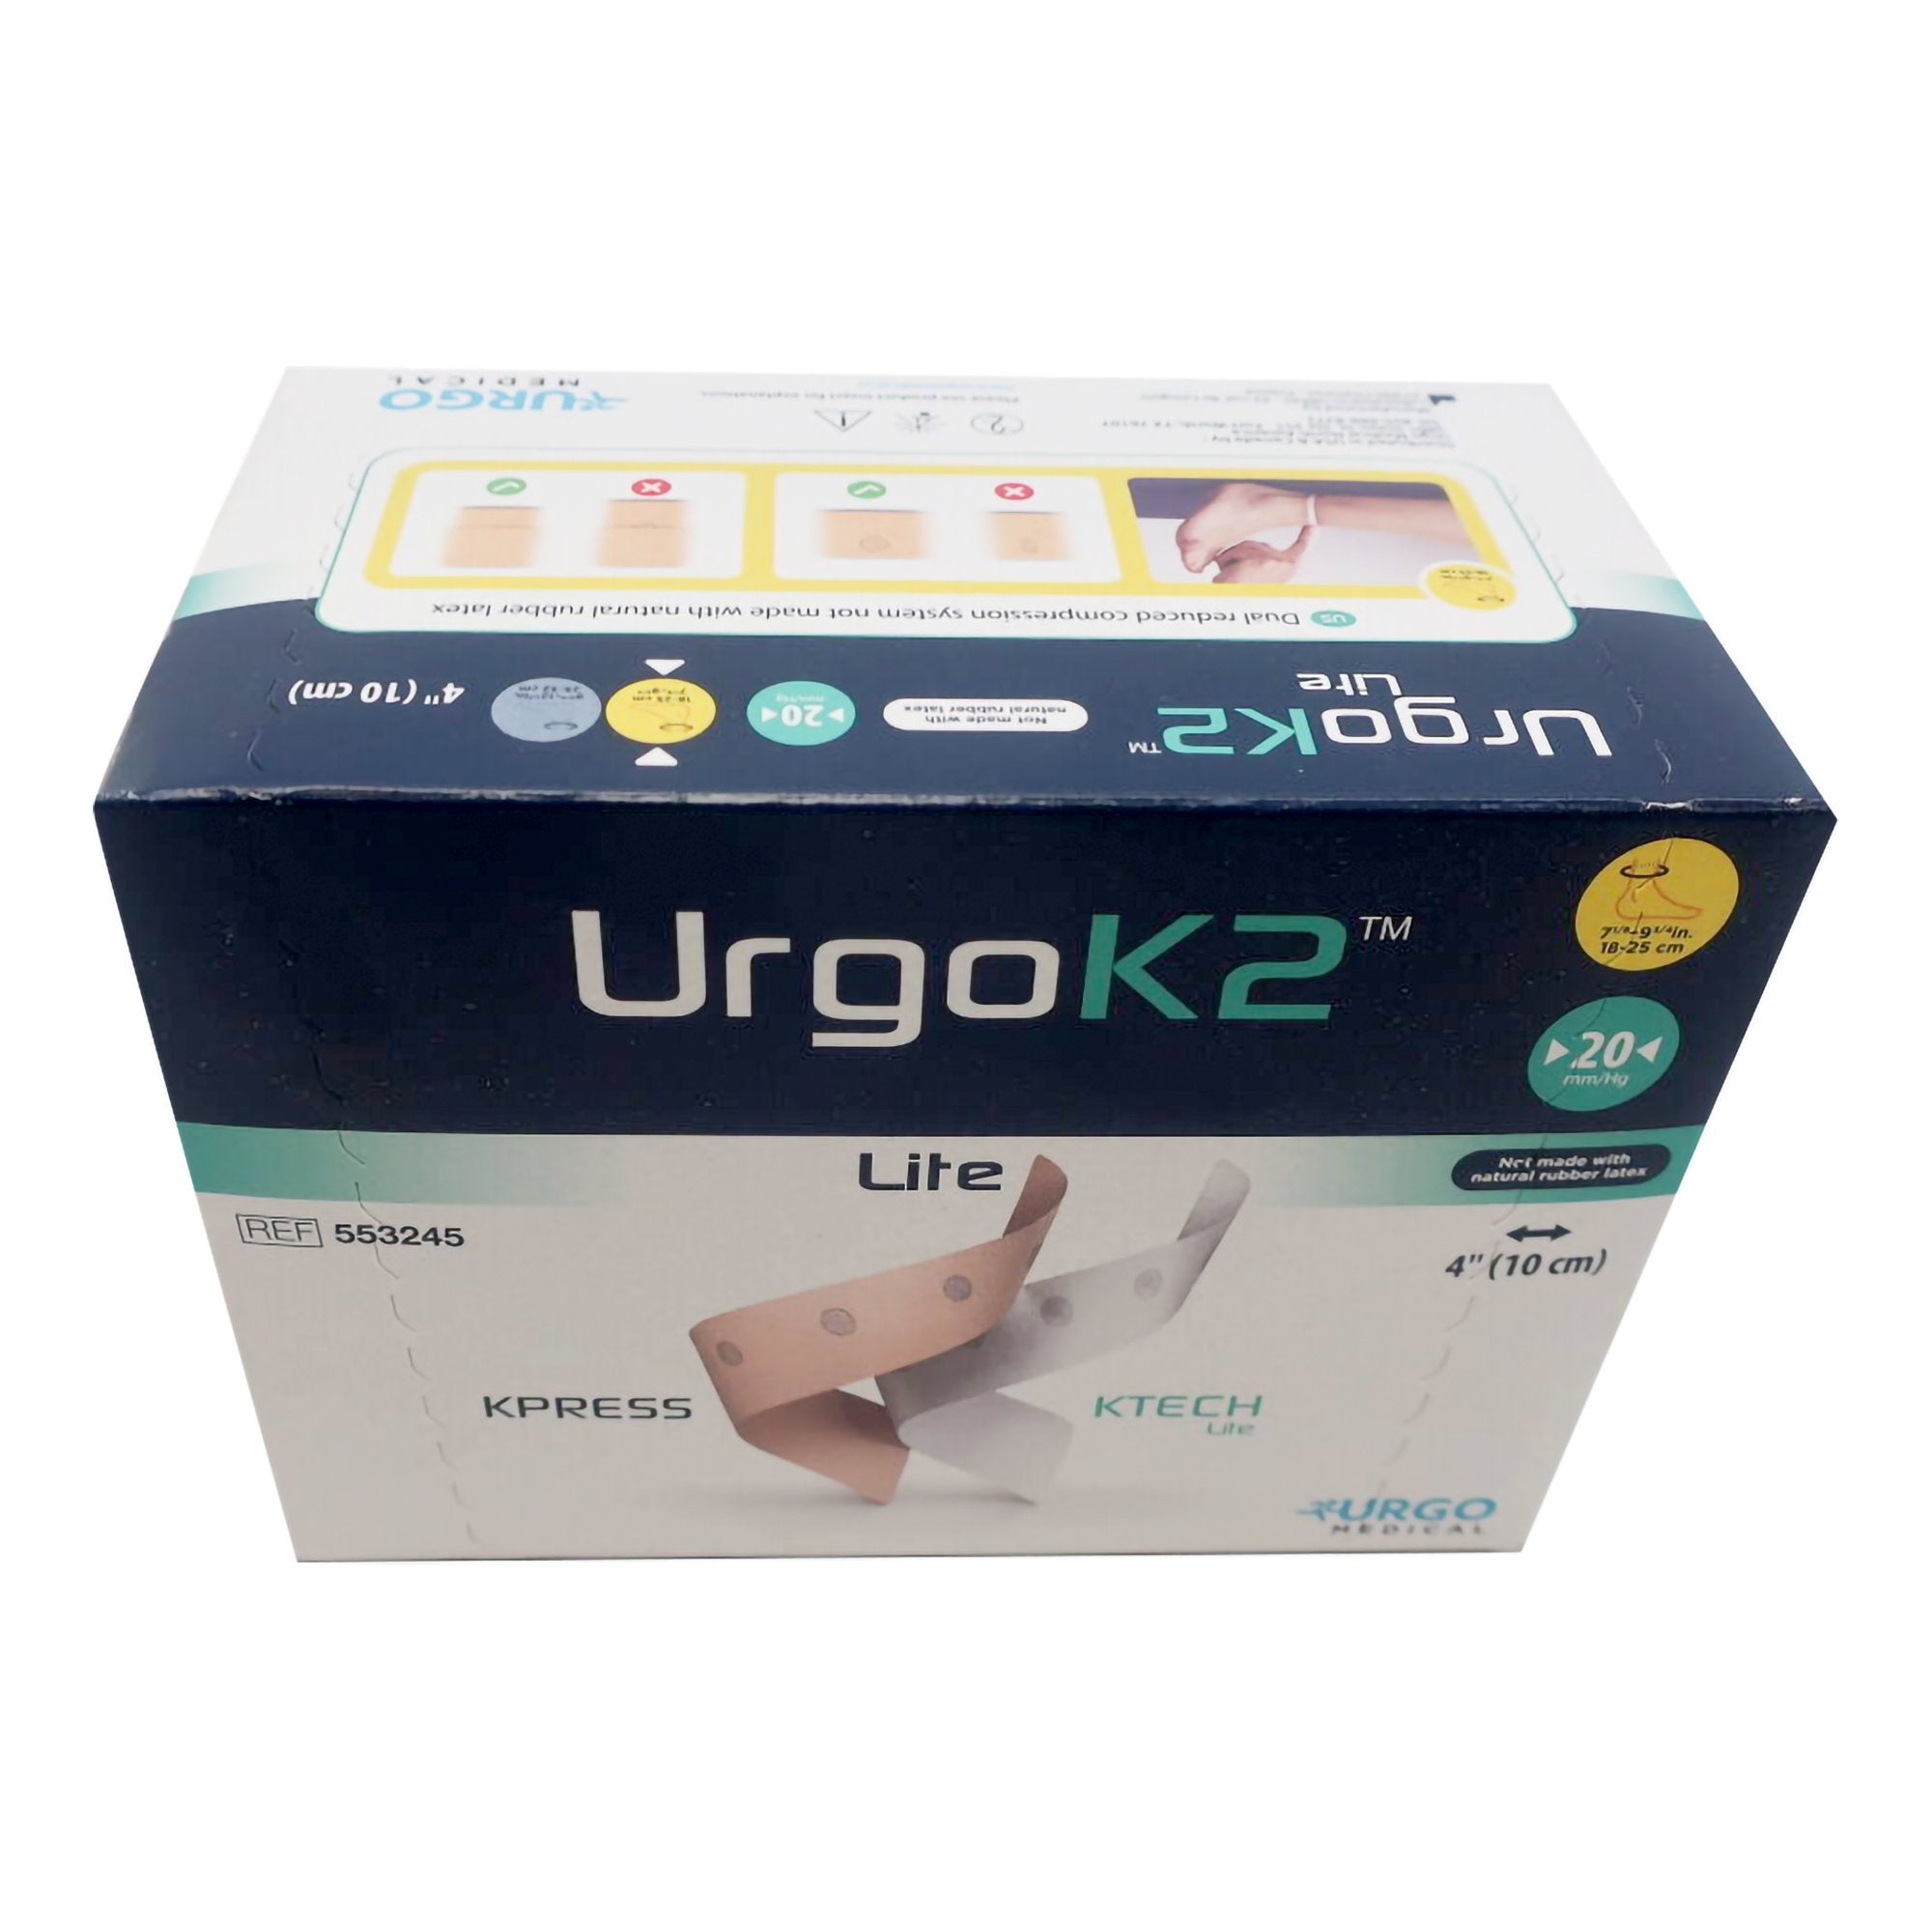 2 Layer Compression Bandage System URGOK2™ Lite 4 X 7-1/8 to 9-3/4 Inch Self-Adherent Closure Tan / White / Pink NonSterile Regular 20 mmHg